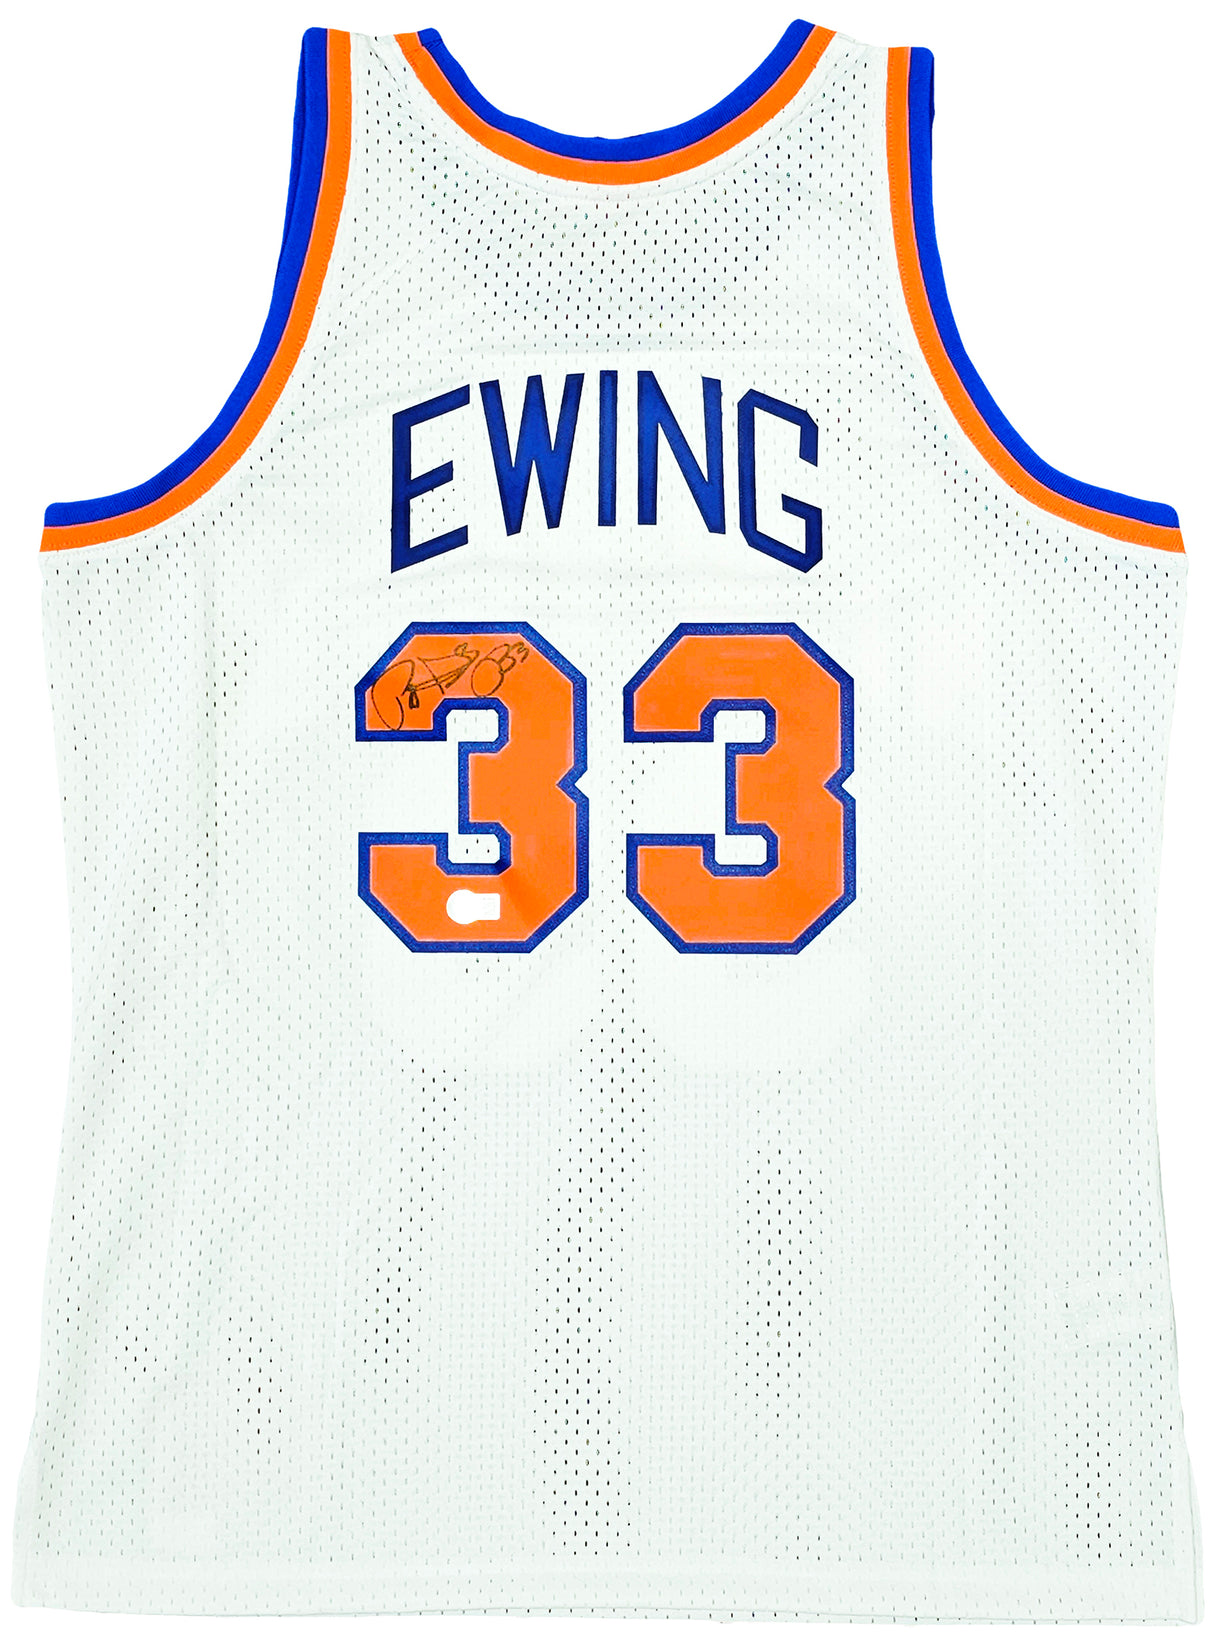 New York Knicks Patrick Ewing Autographed White Authentic Mitchell & Ness 1985-86 HWC Swingman Jersey Size L Beckett BAS Witness Stock #214820